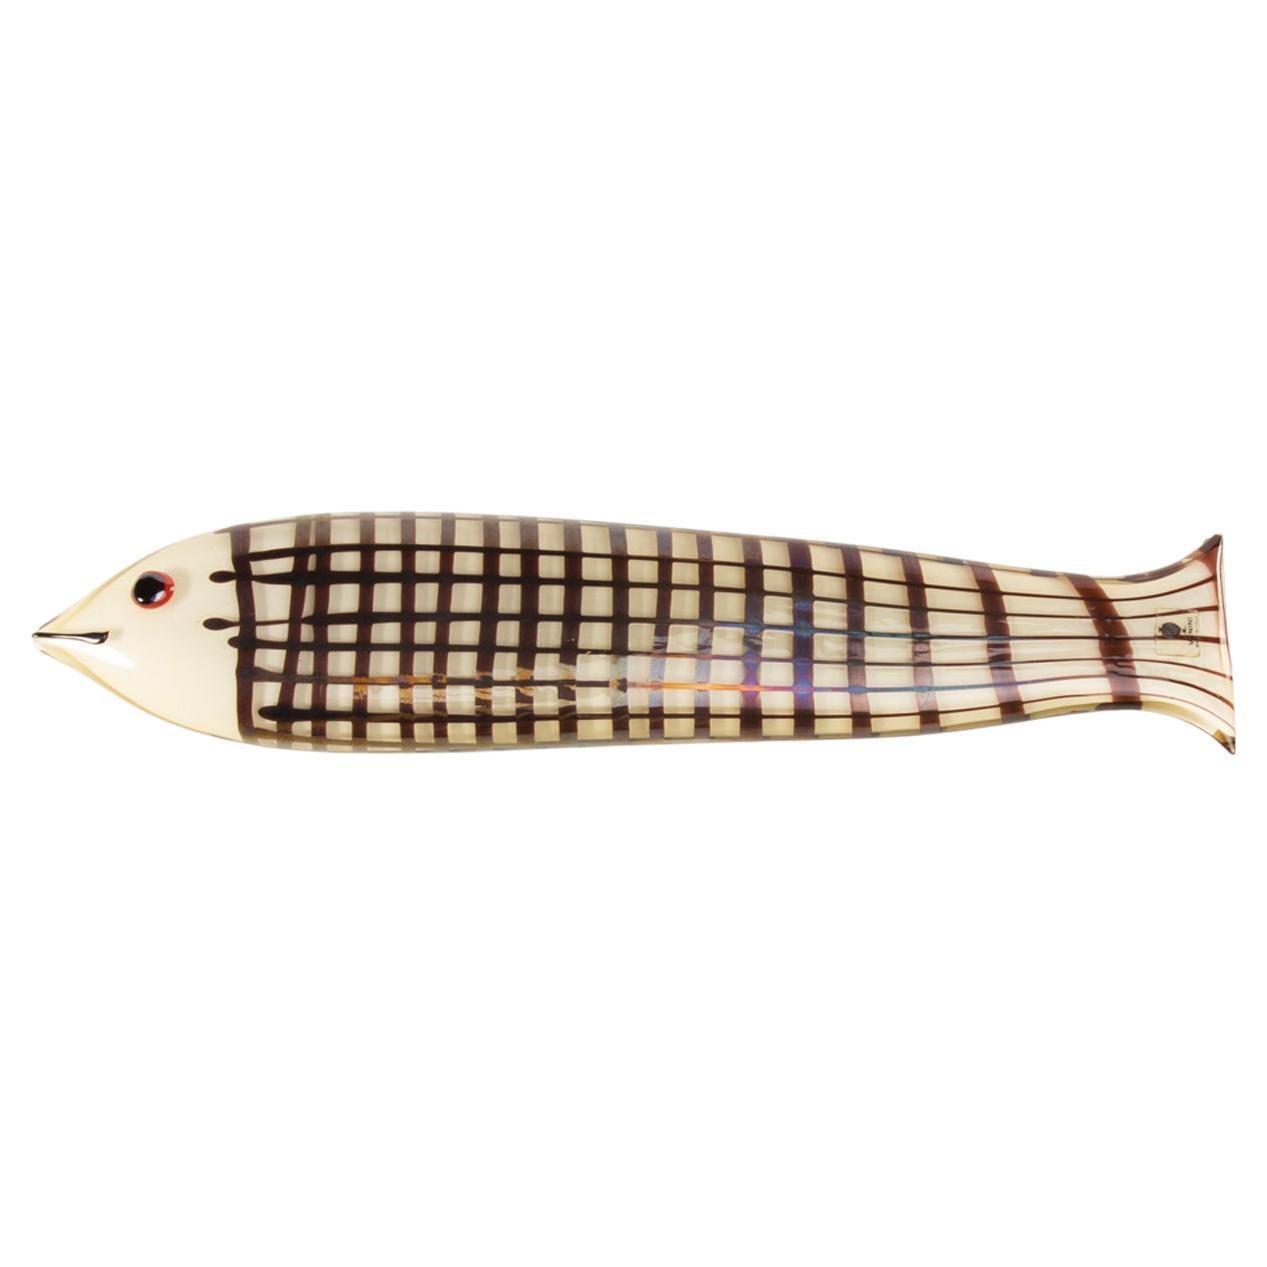 Sculpture Modeled as a Fish, Ken Scott, Venini